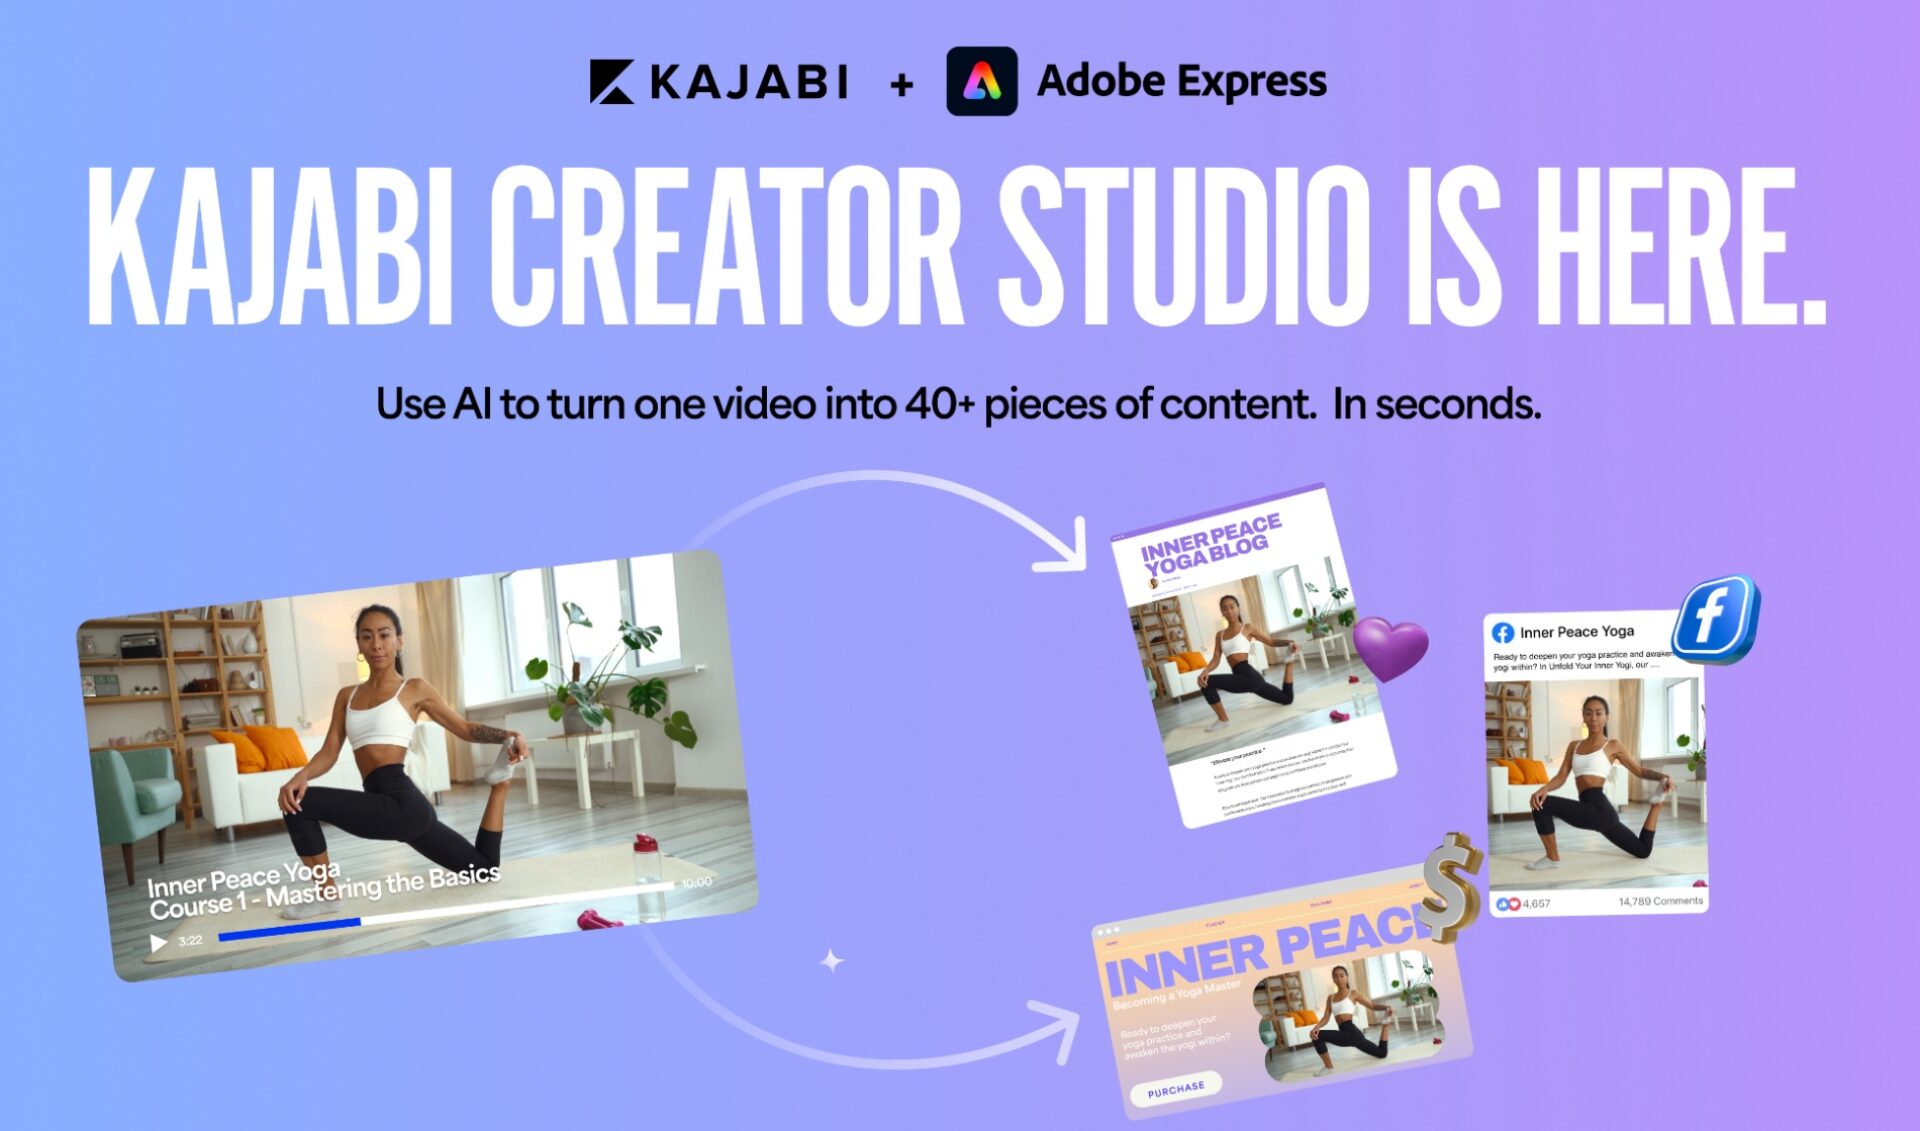 Kajabi integrates its Creator Studio into Adobe Express to generate more AI insights